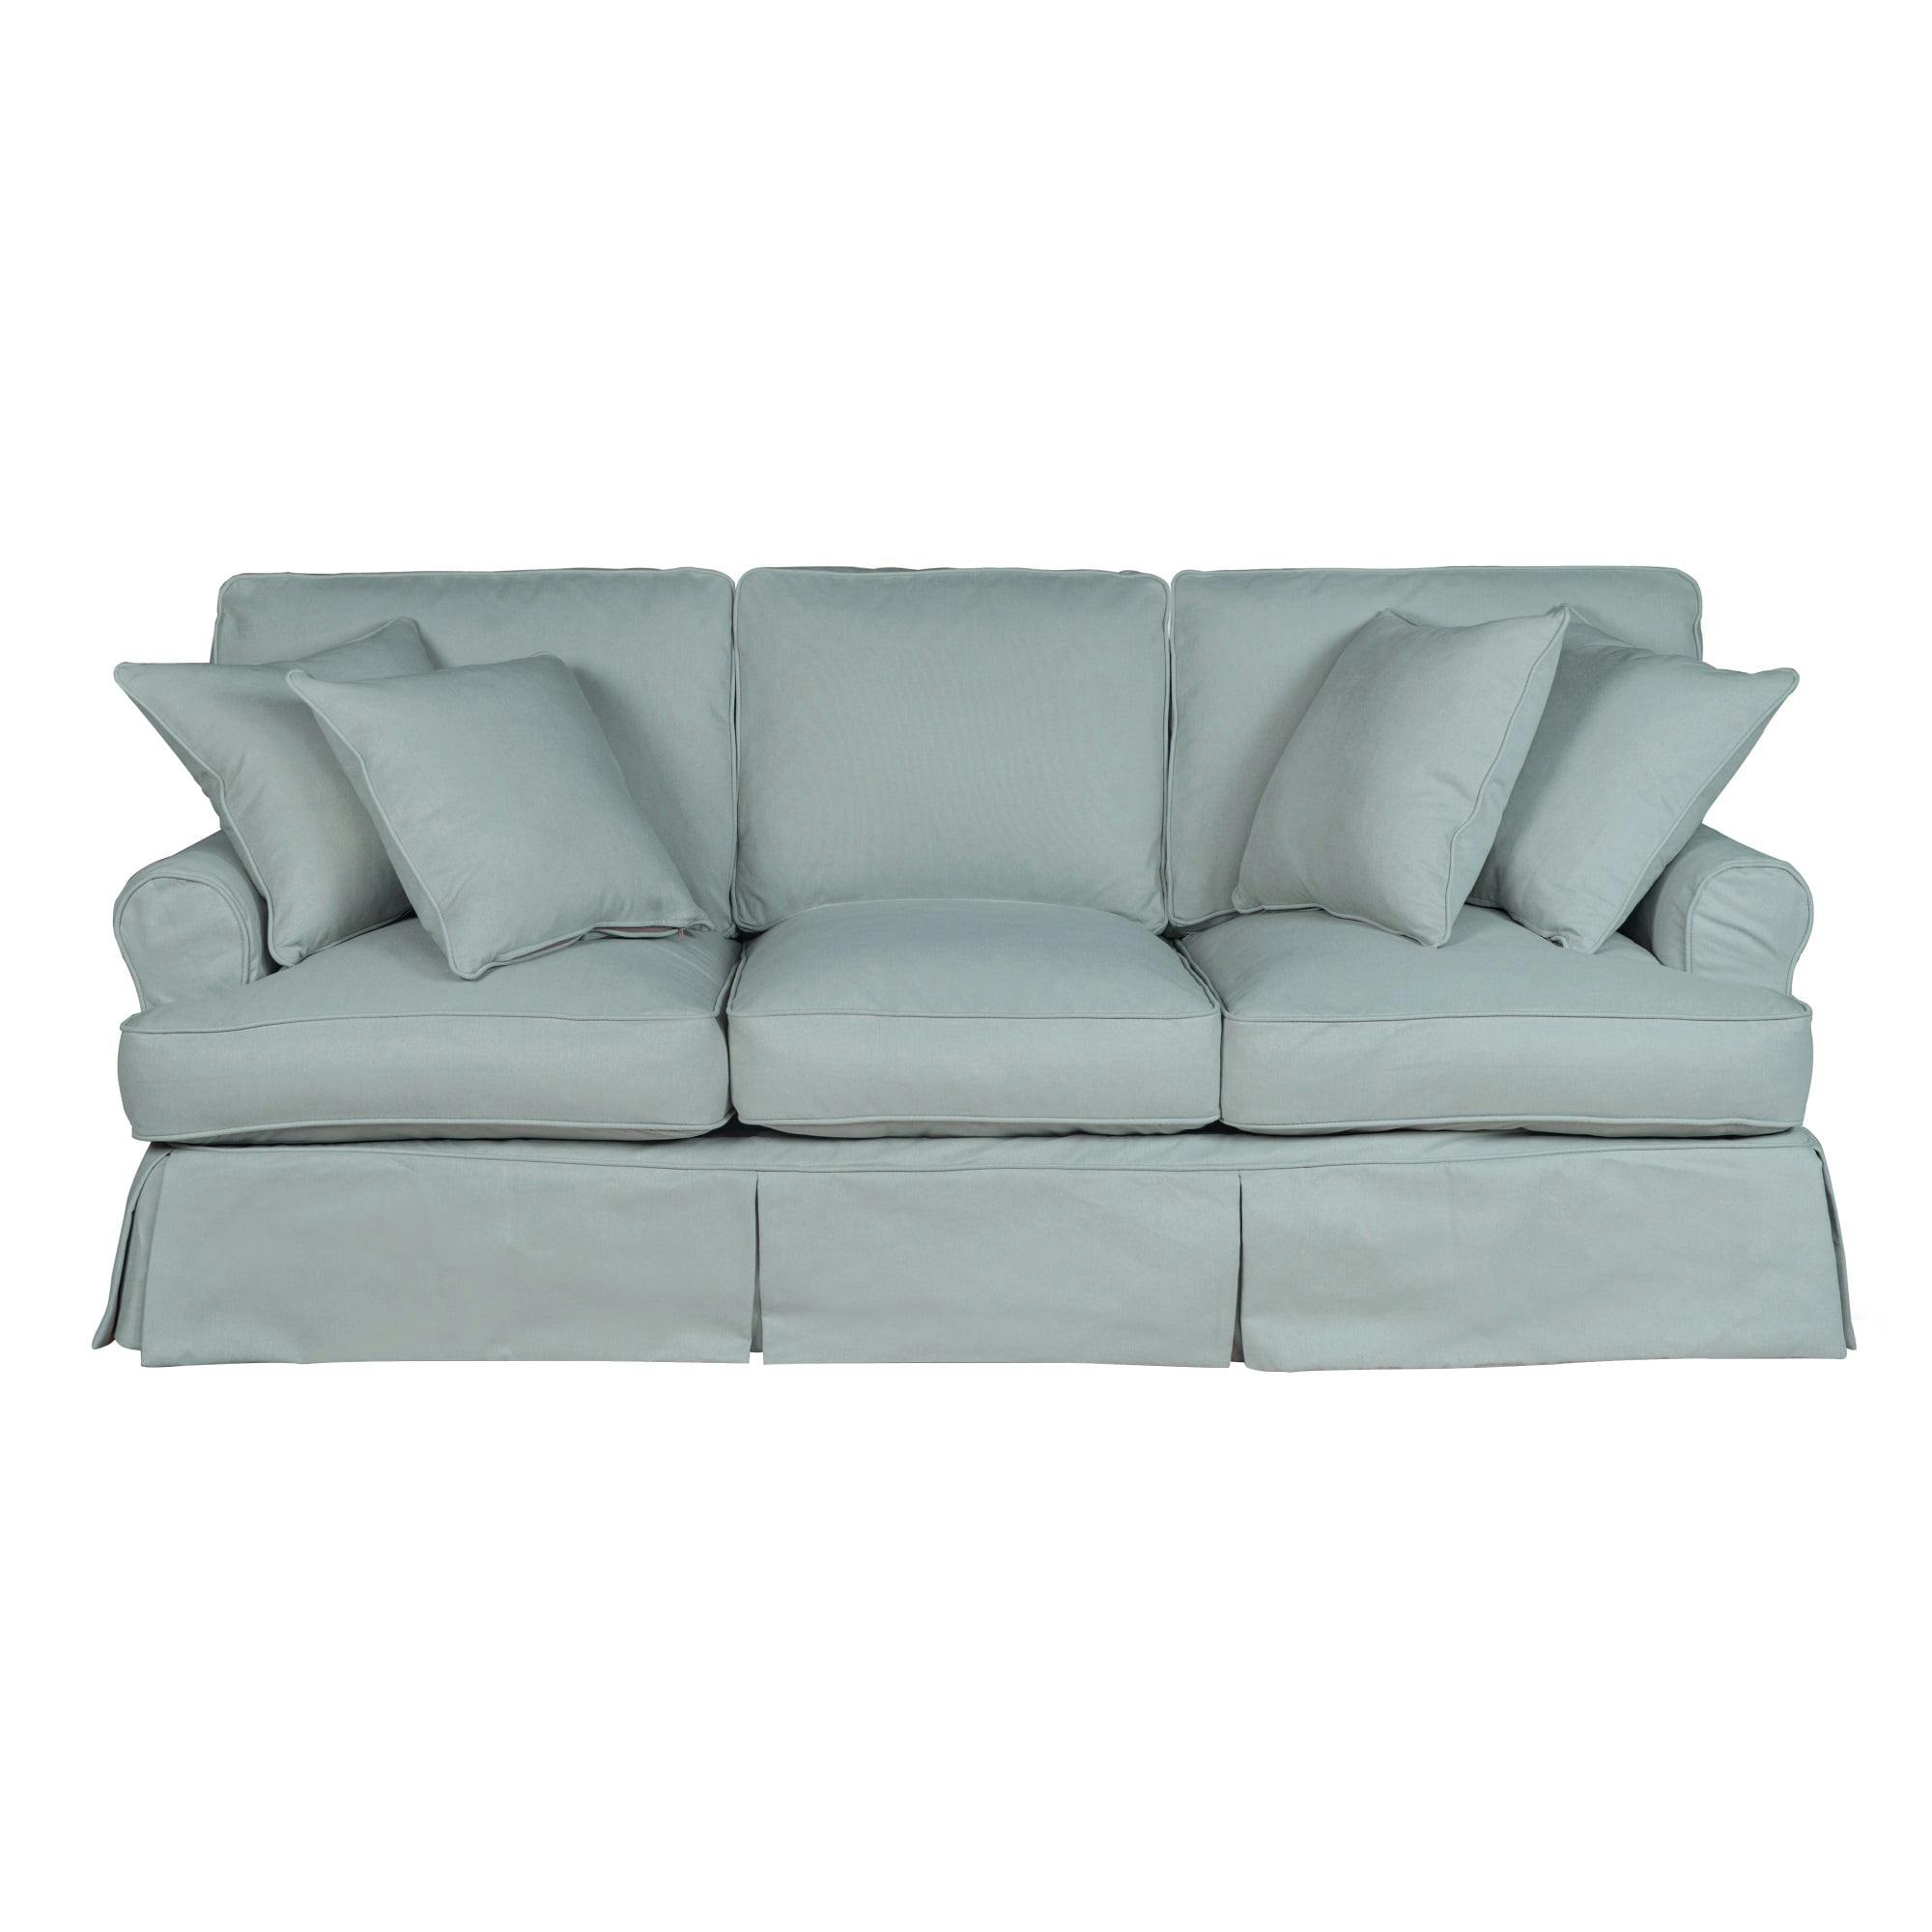 Ocean Blue Linen Sleeper Sofa with Down Fill Cushions